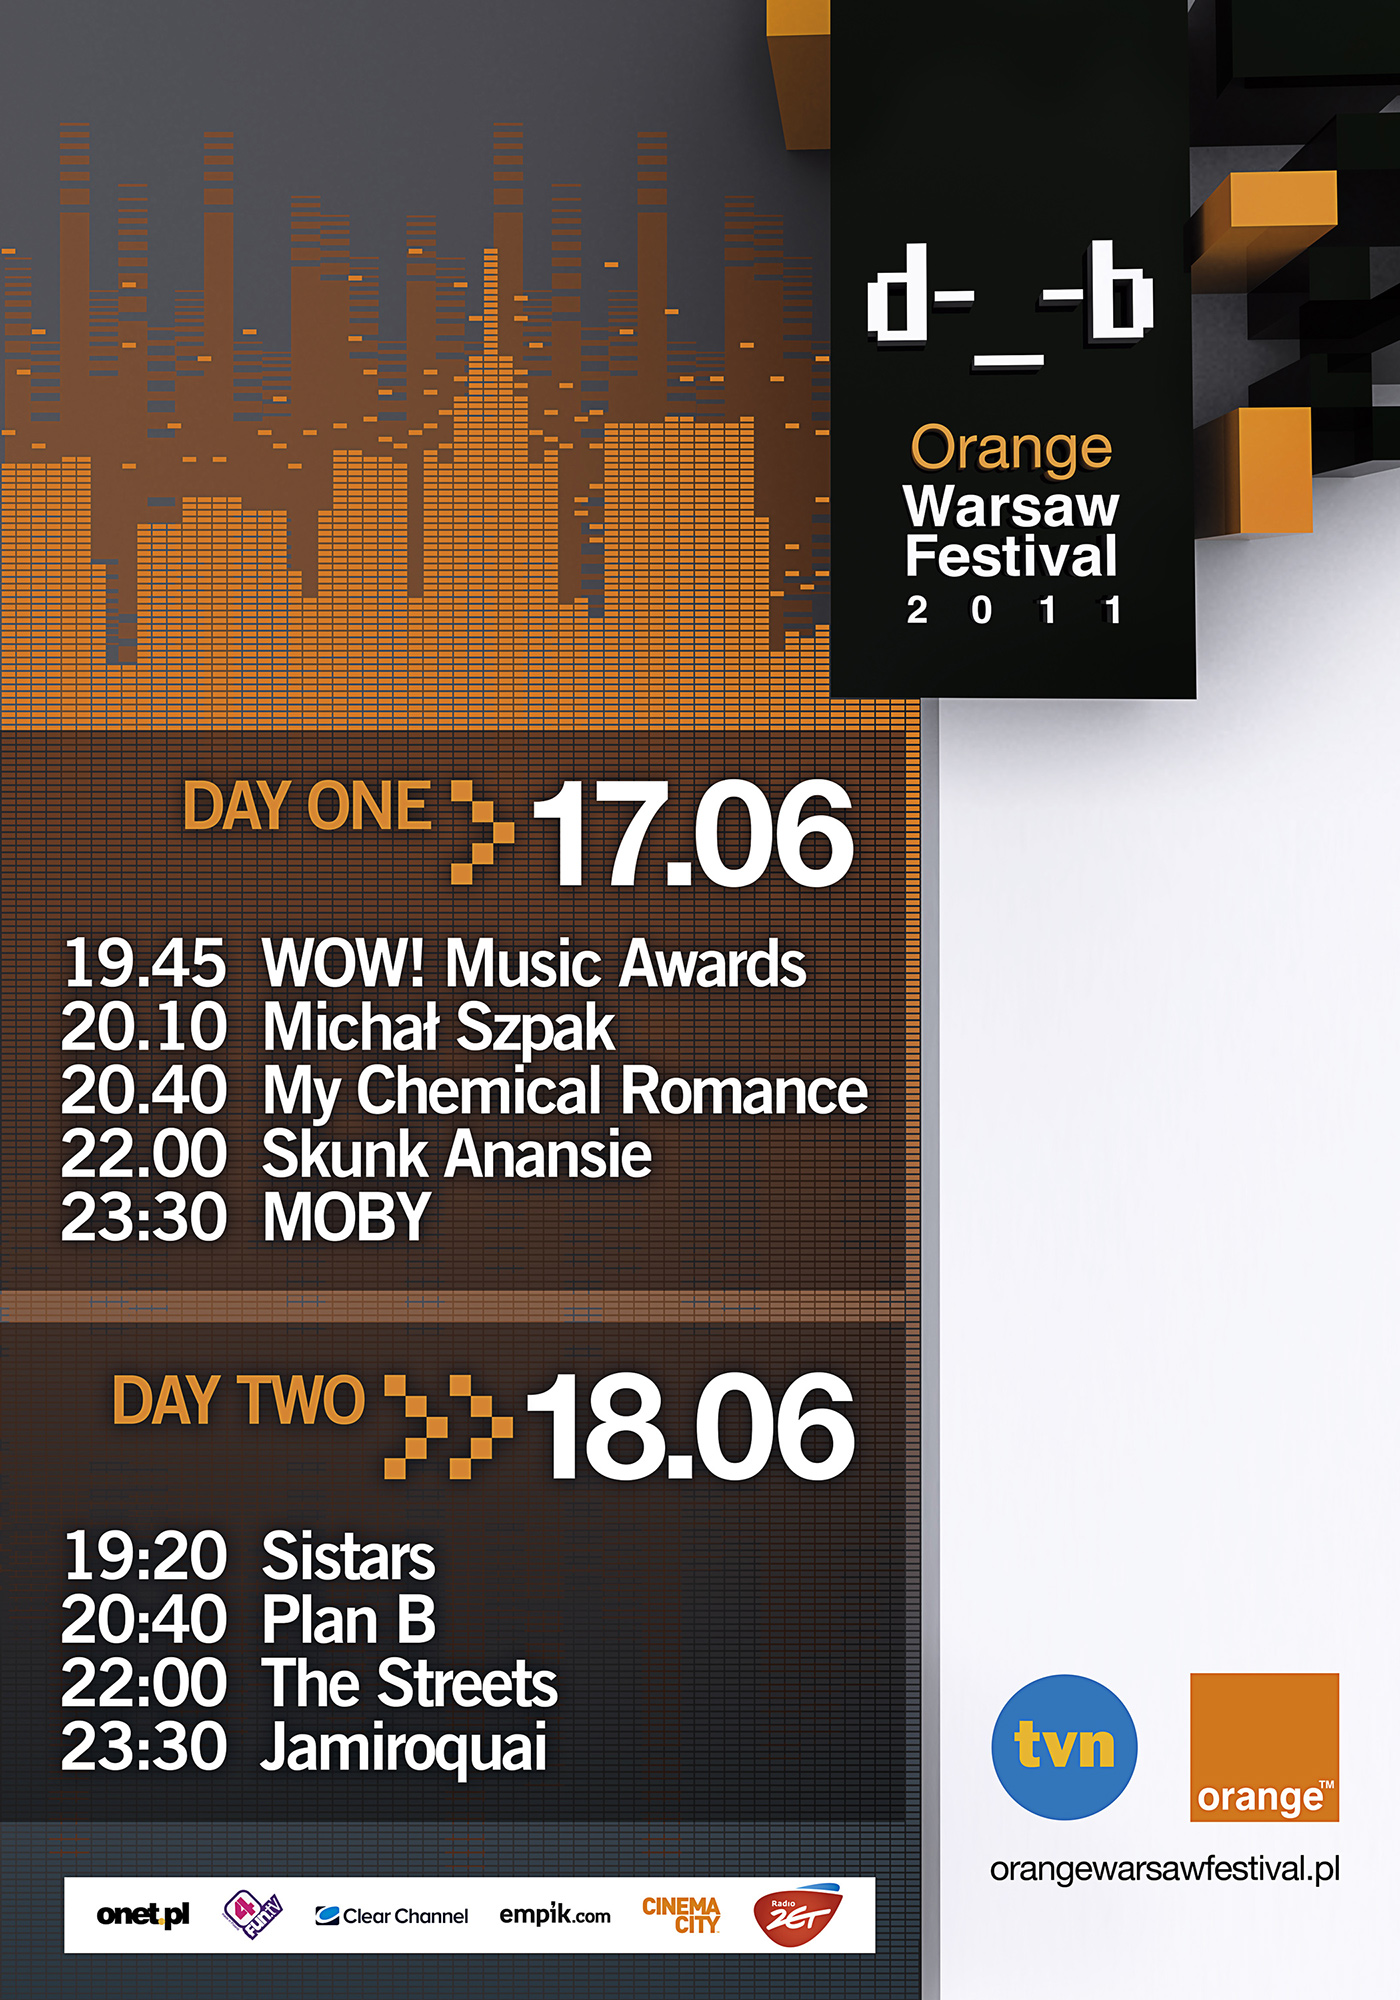 orange warsaw festival